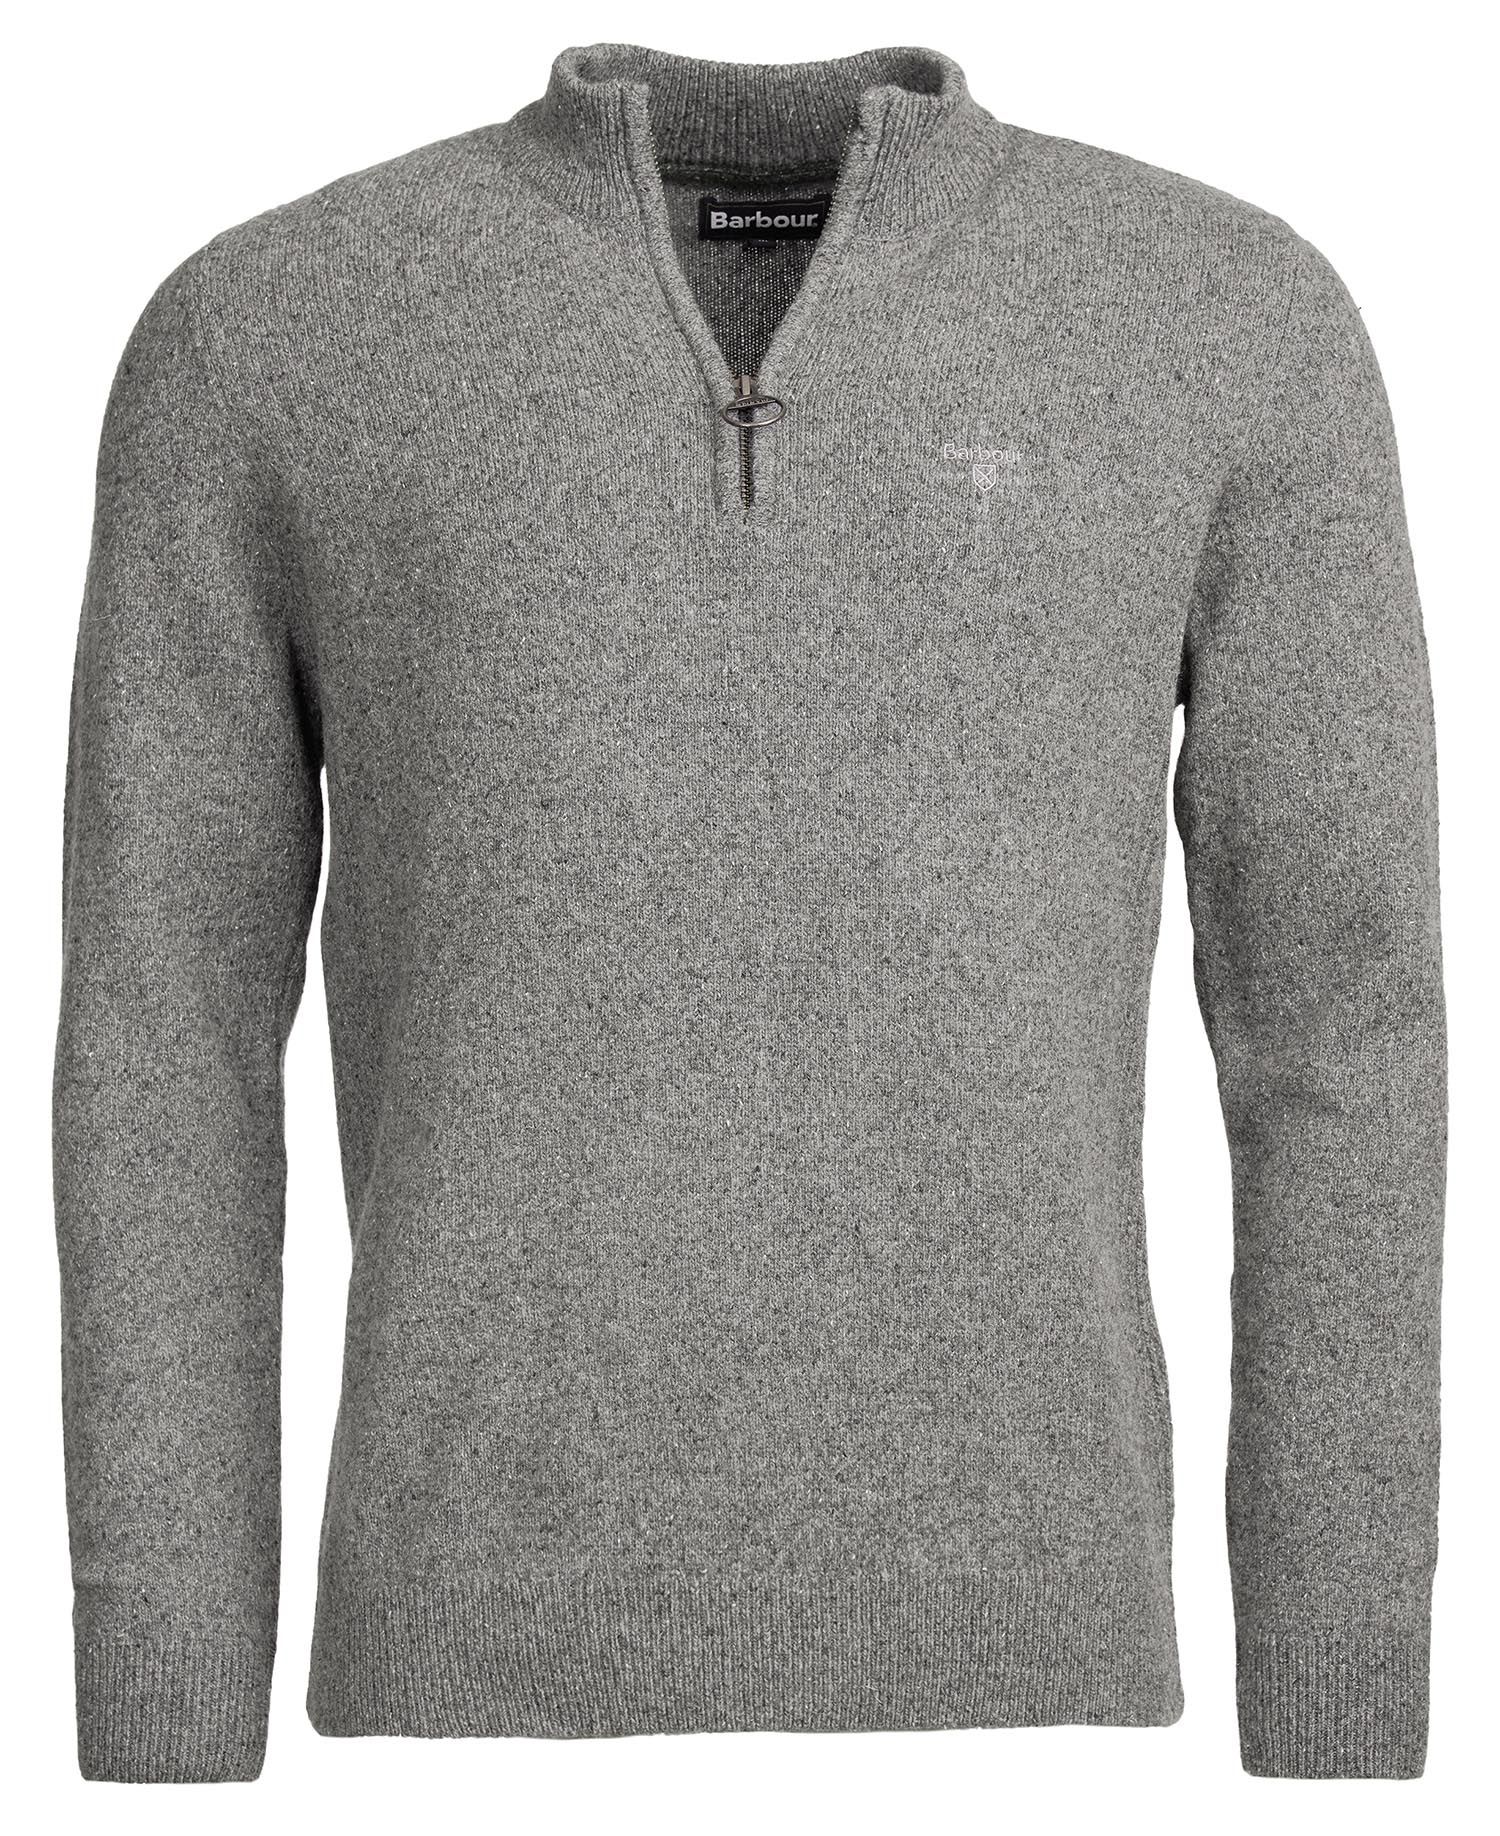 Barbour Tisbury Half Zip Sweater - Grey SeriousCountrySports.com